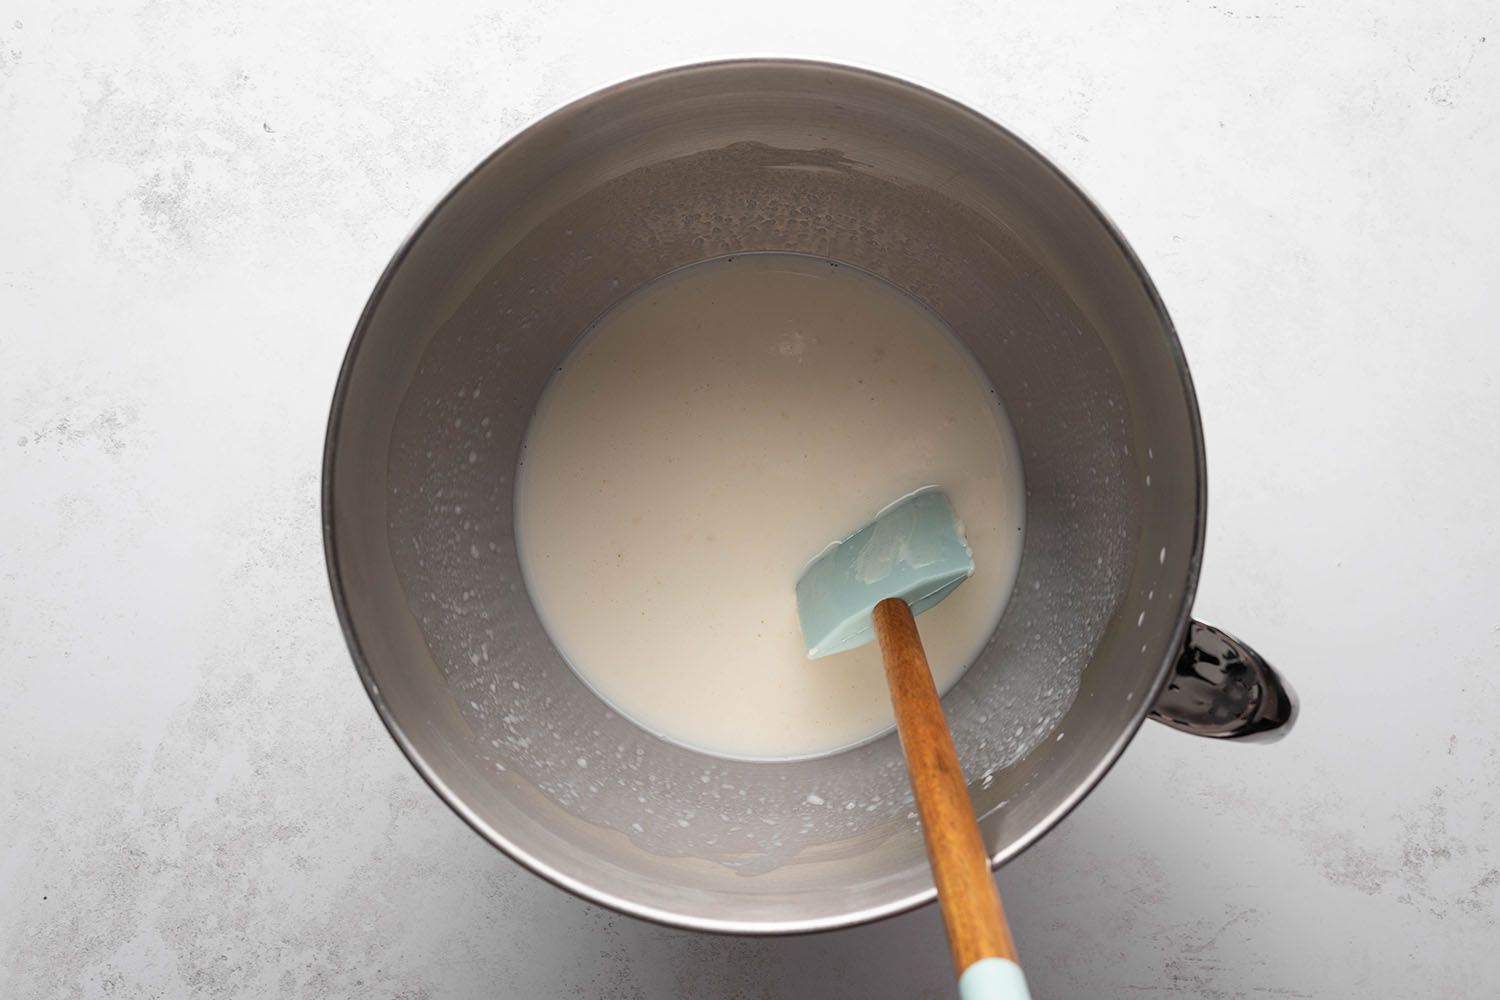 Stand mixer bowl with milk mixture